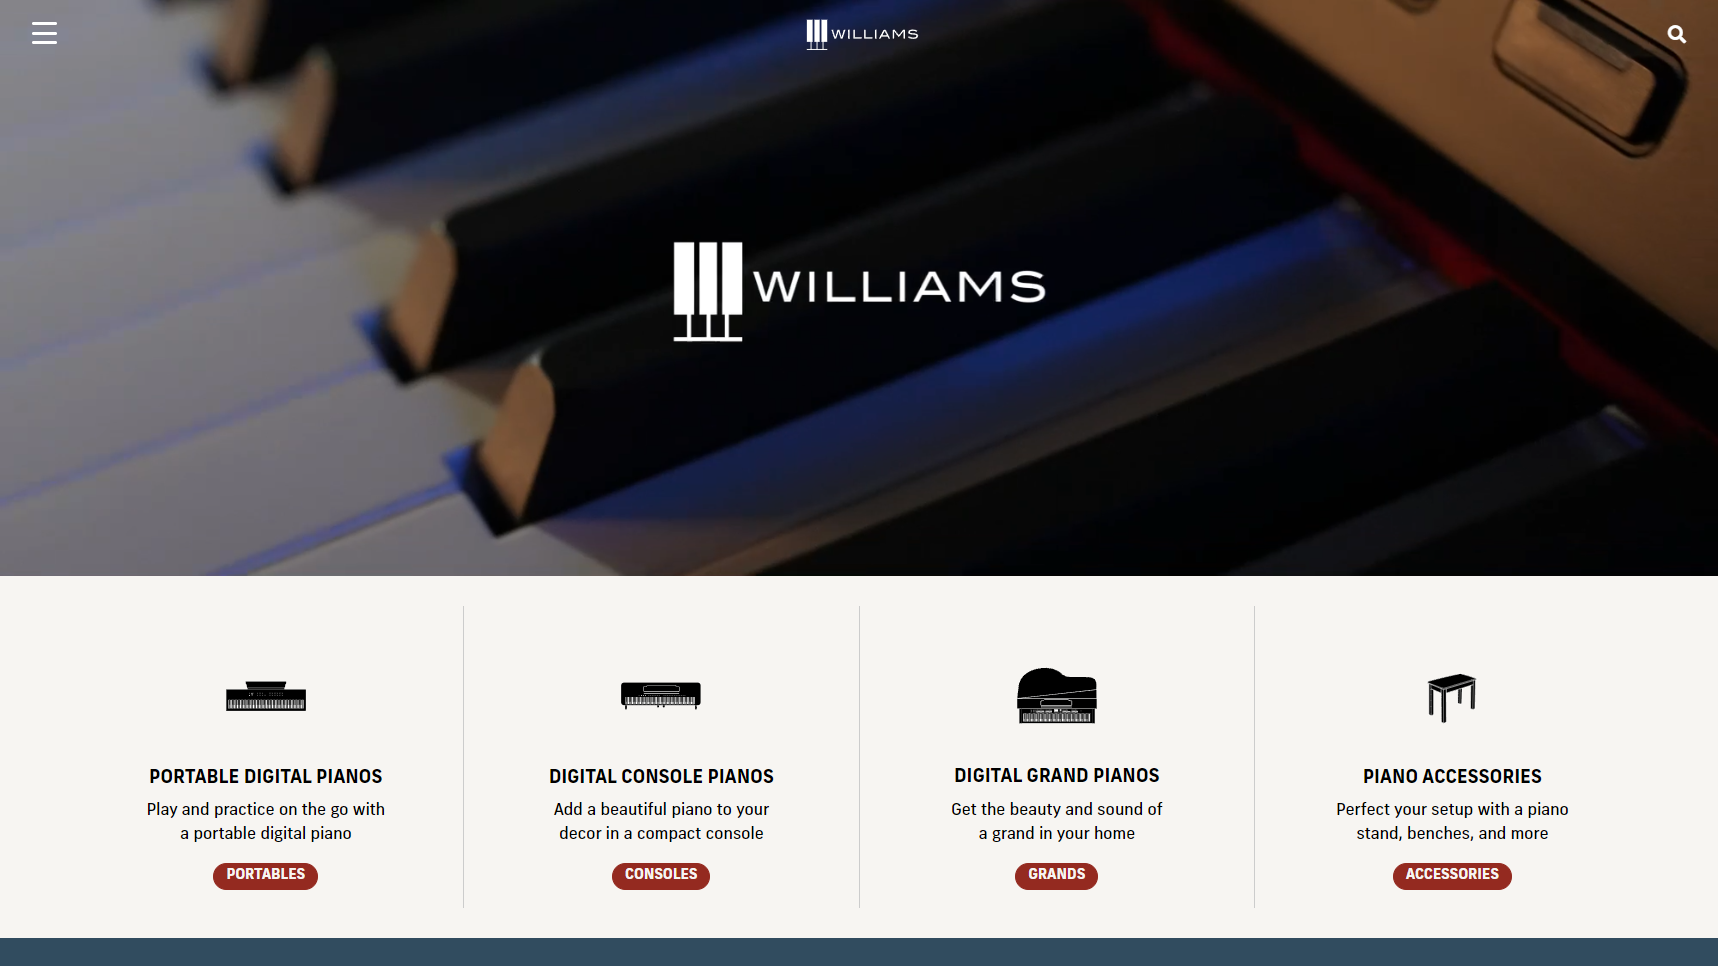 Williams Pianos - Digital Piano Manufacturer